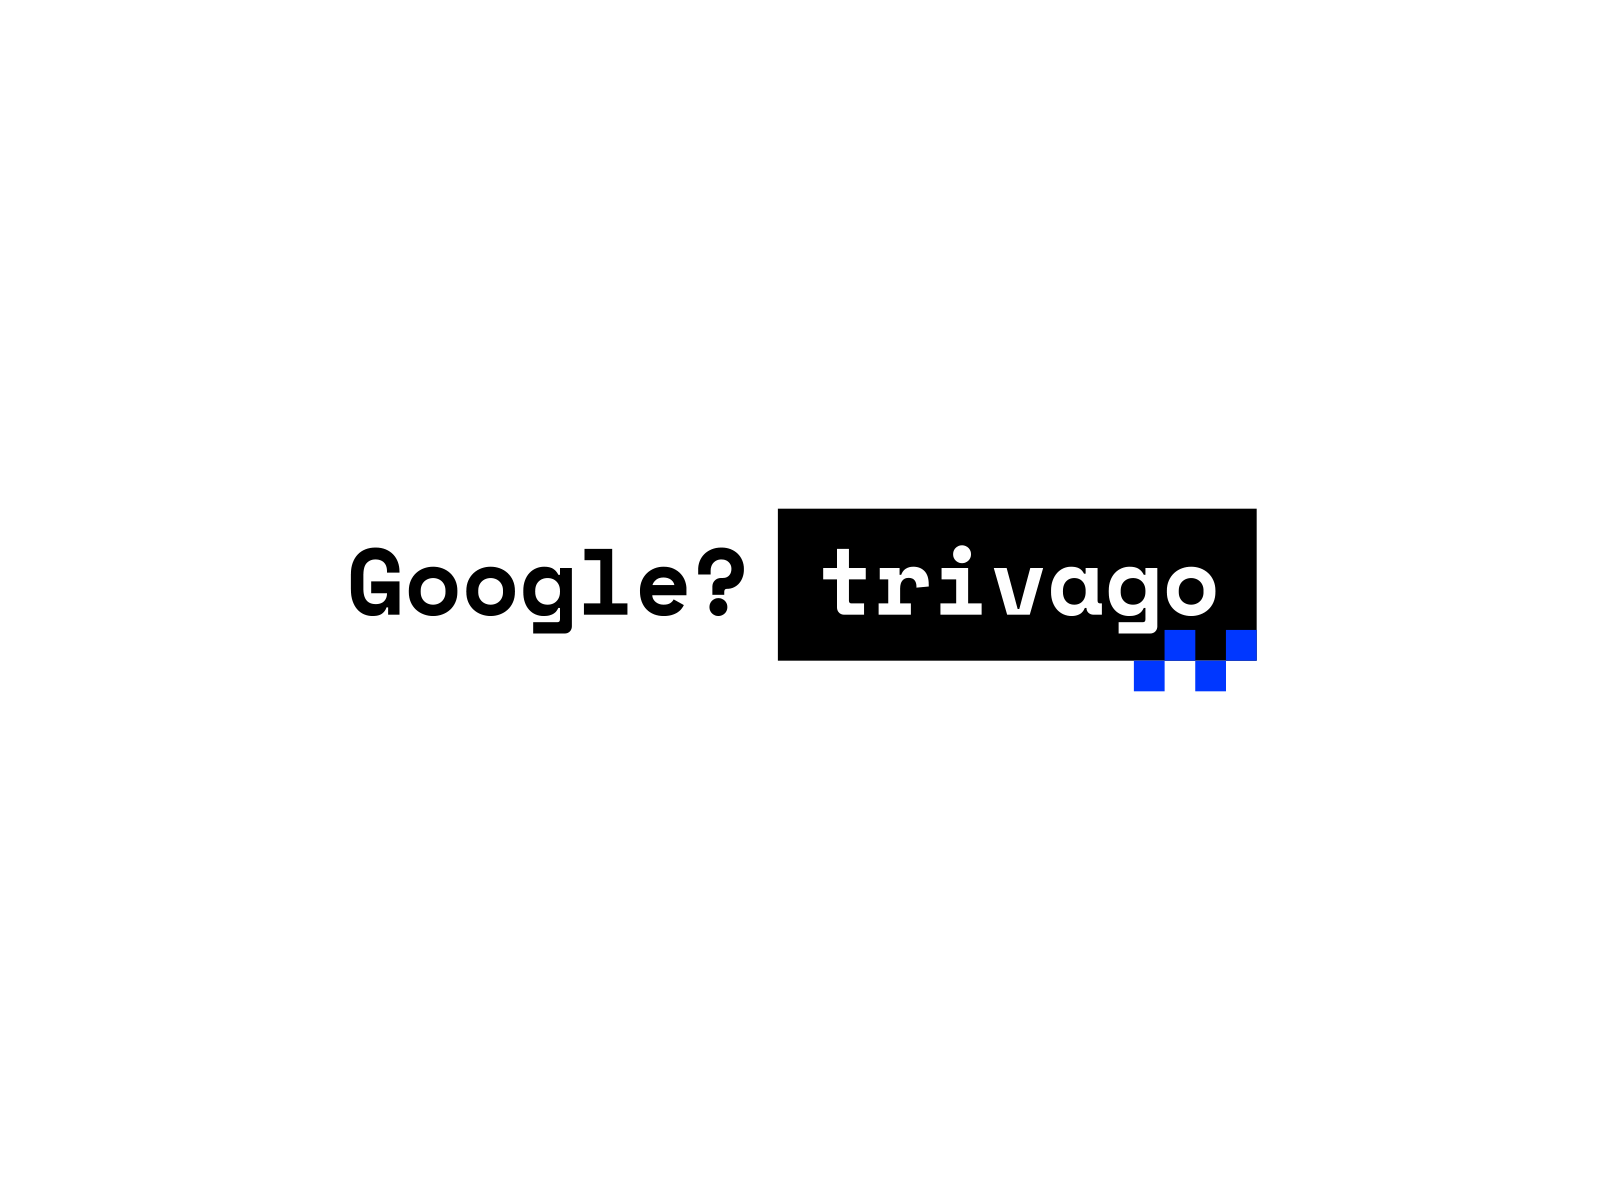 Google x trivago collaboration key visuals art direction artdirection branding concept events graphic graphics identity design illustration visuals